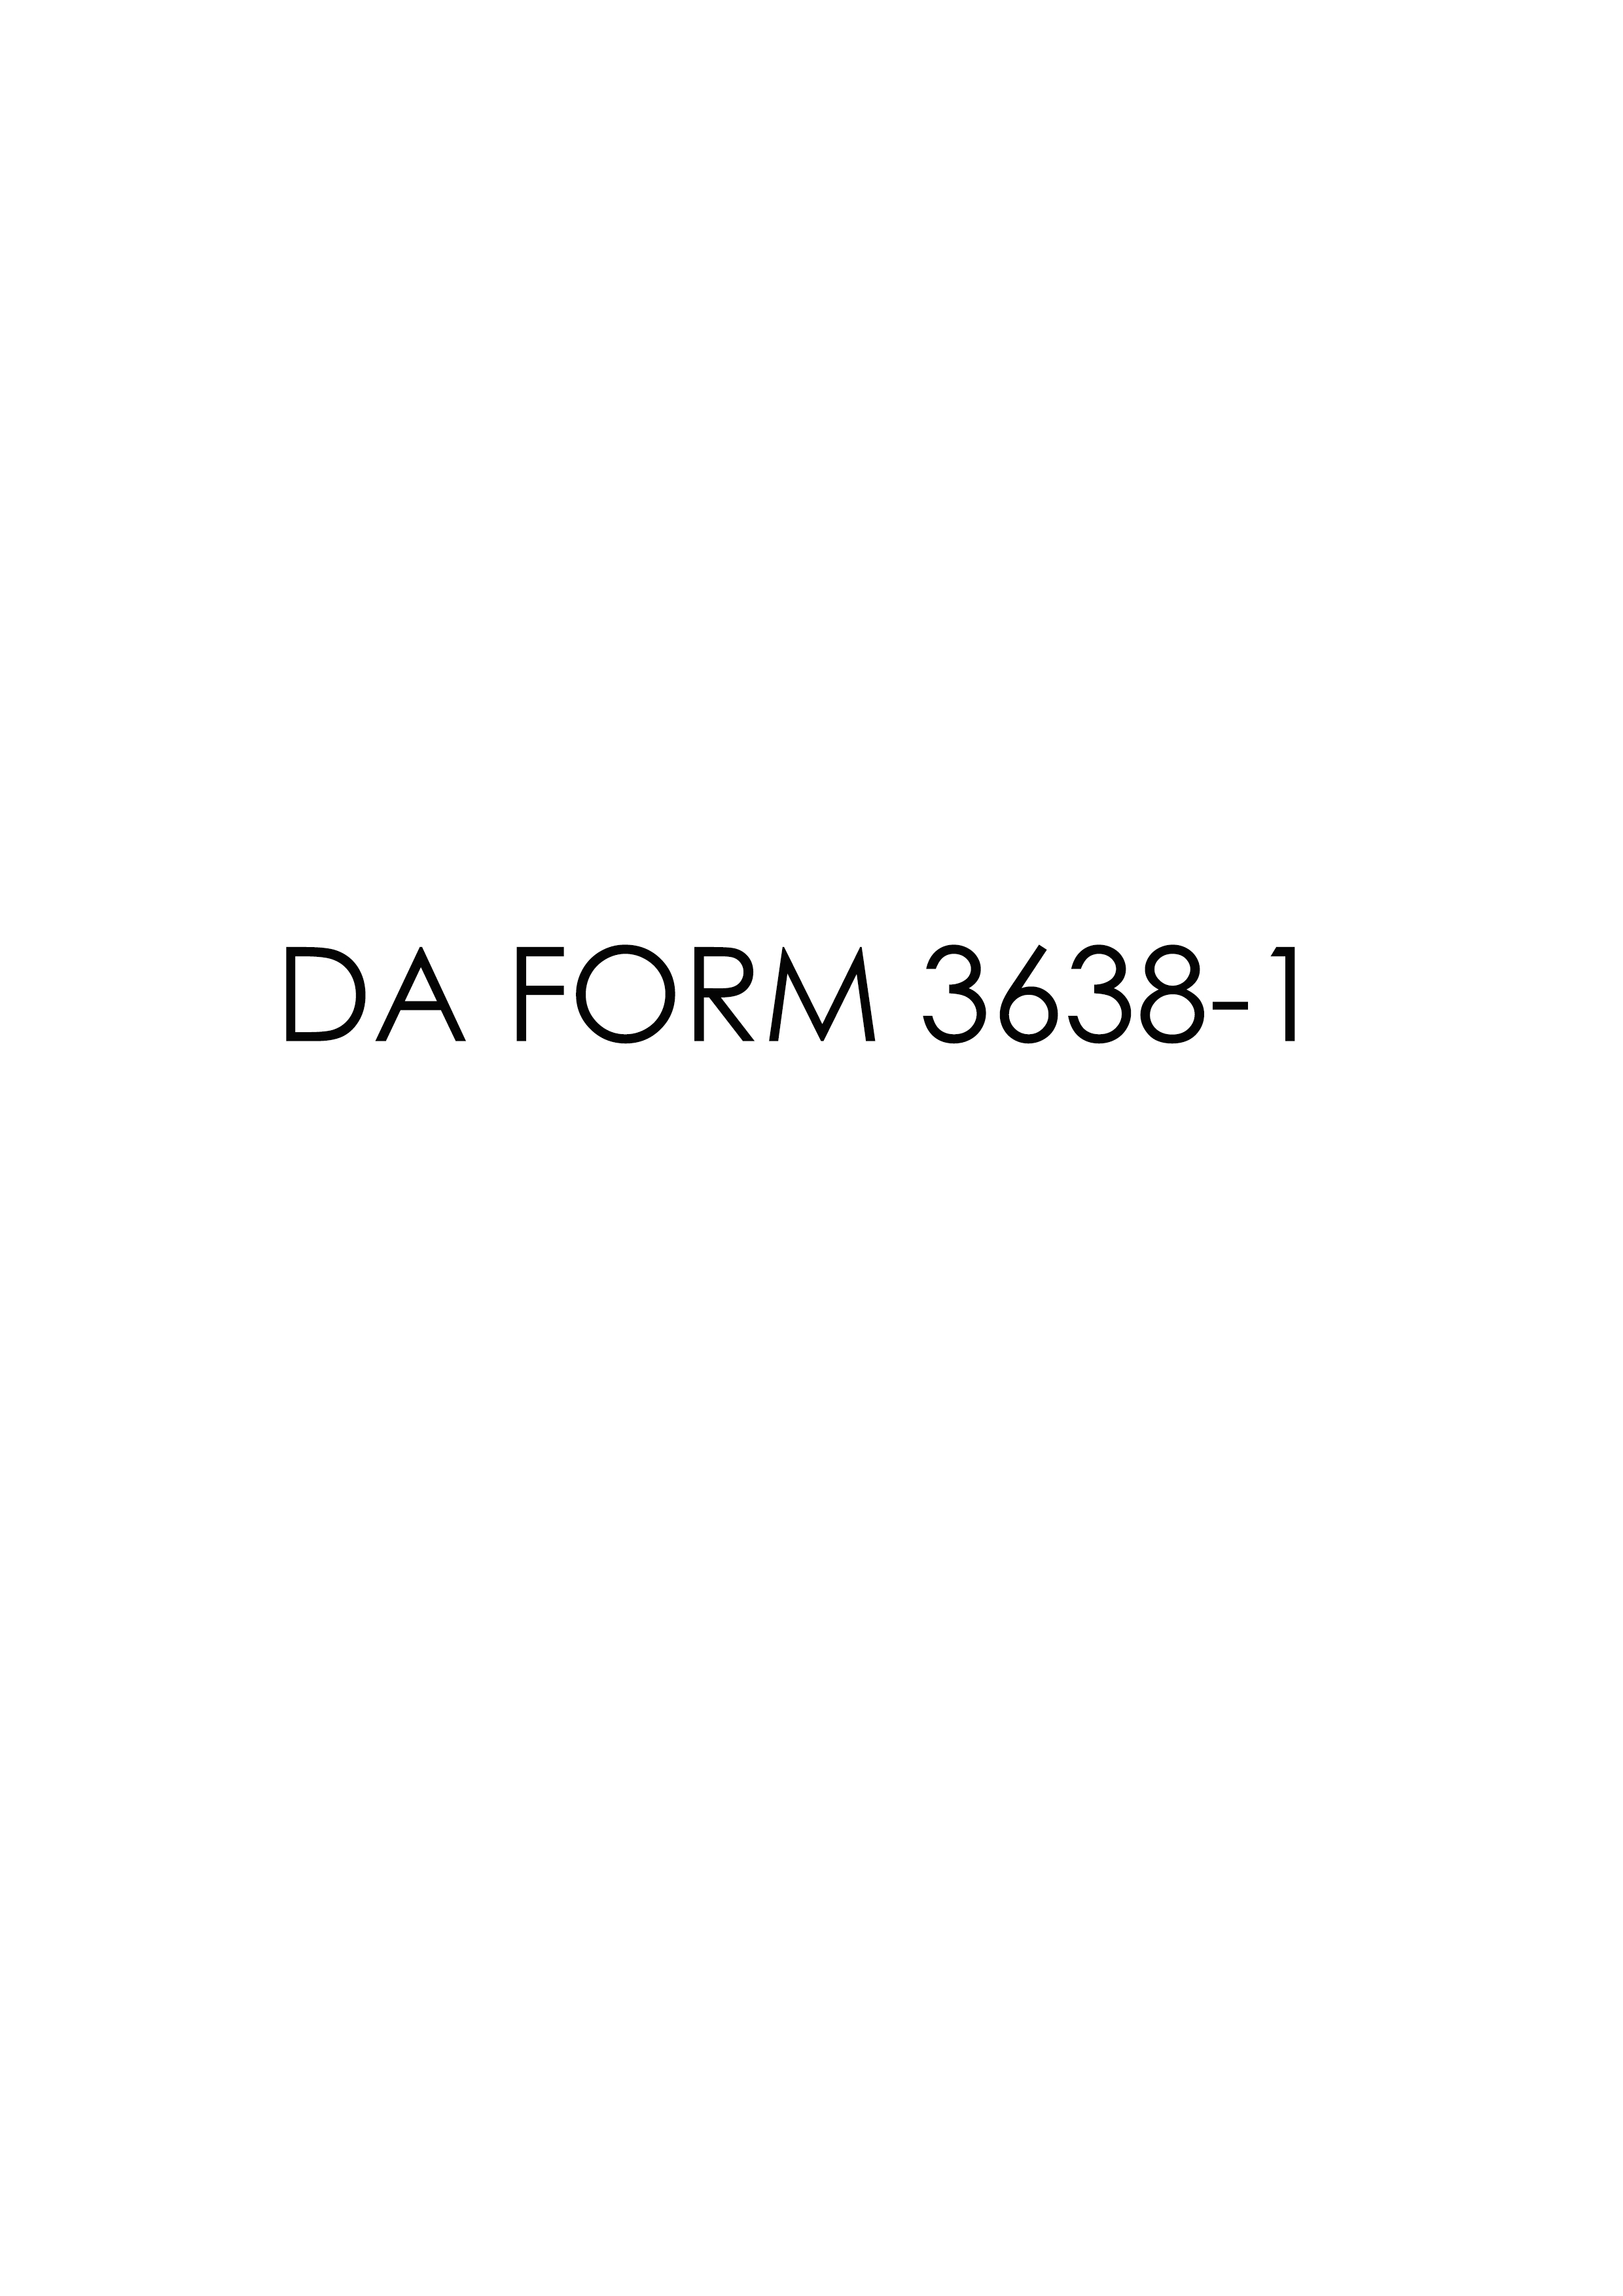 da Form 3638-1 fillable